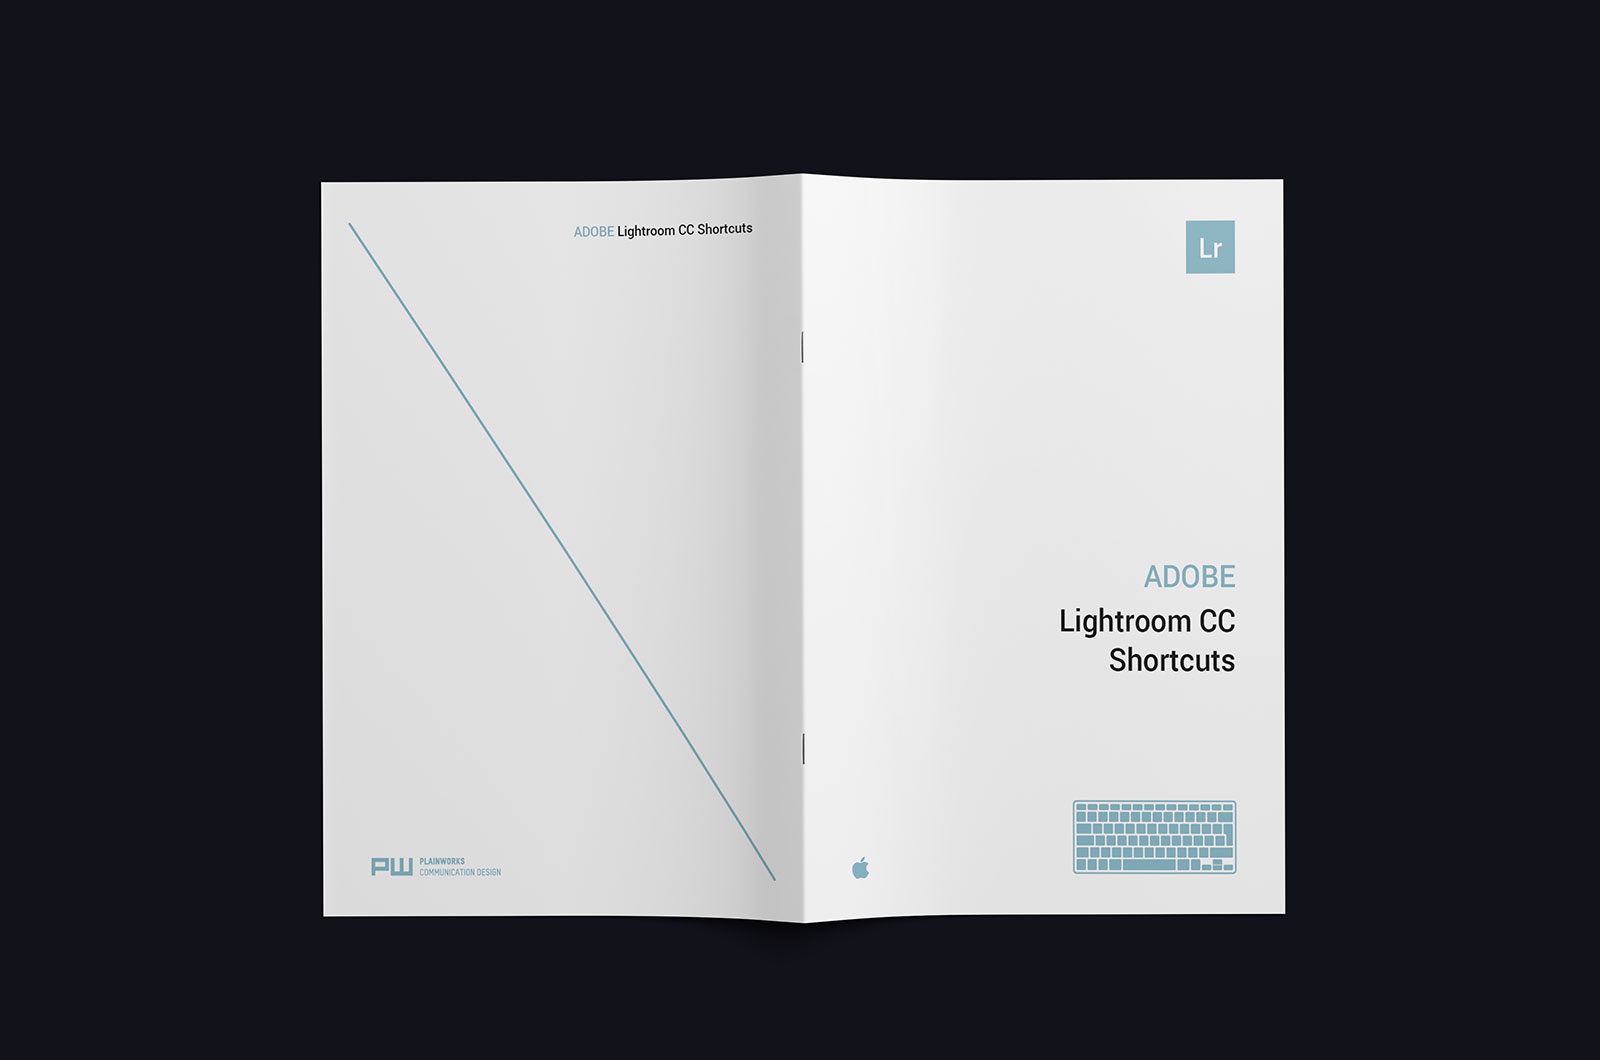 Alexander Glante - Works - Adobe Creative Cloud Shortcuts - 11